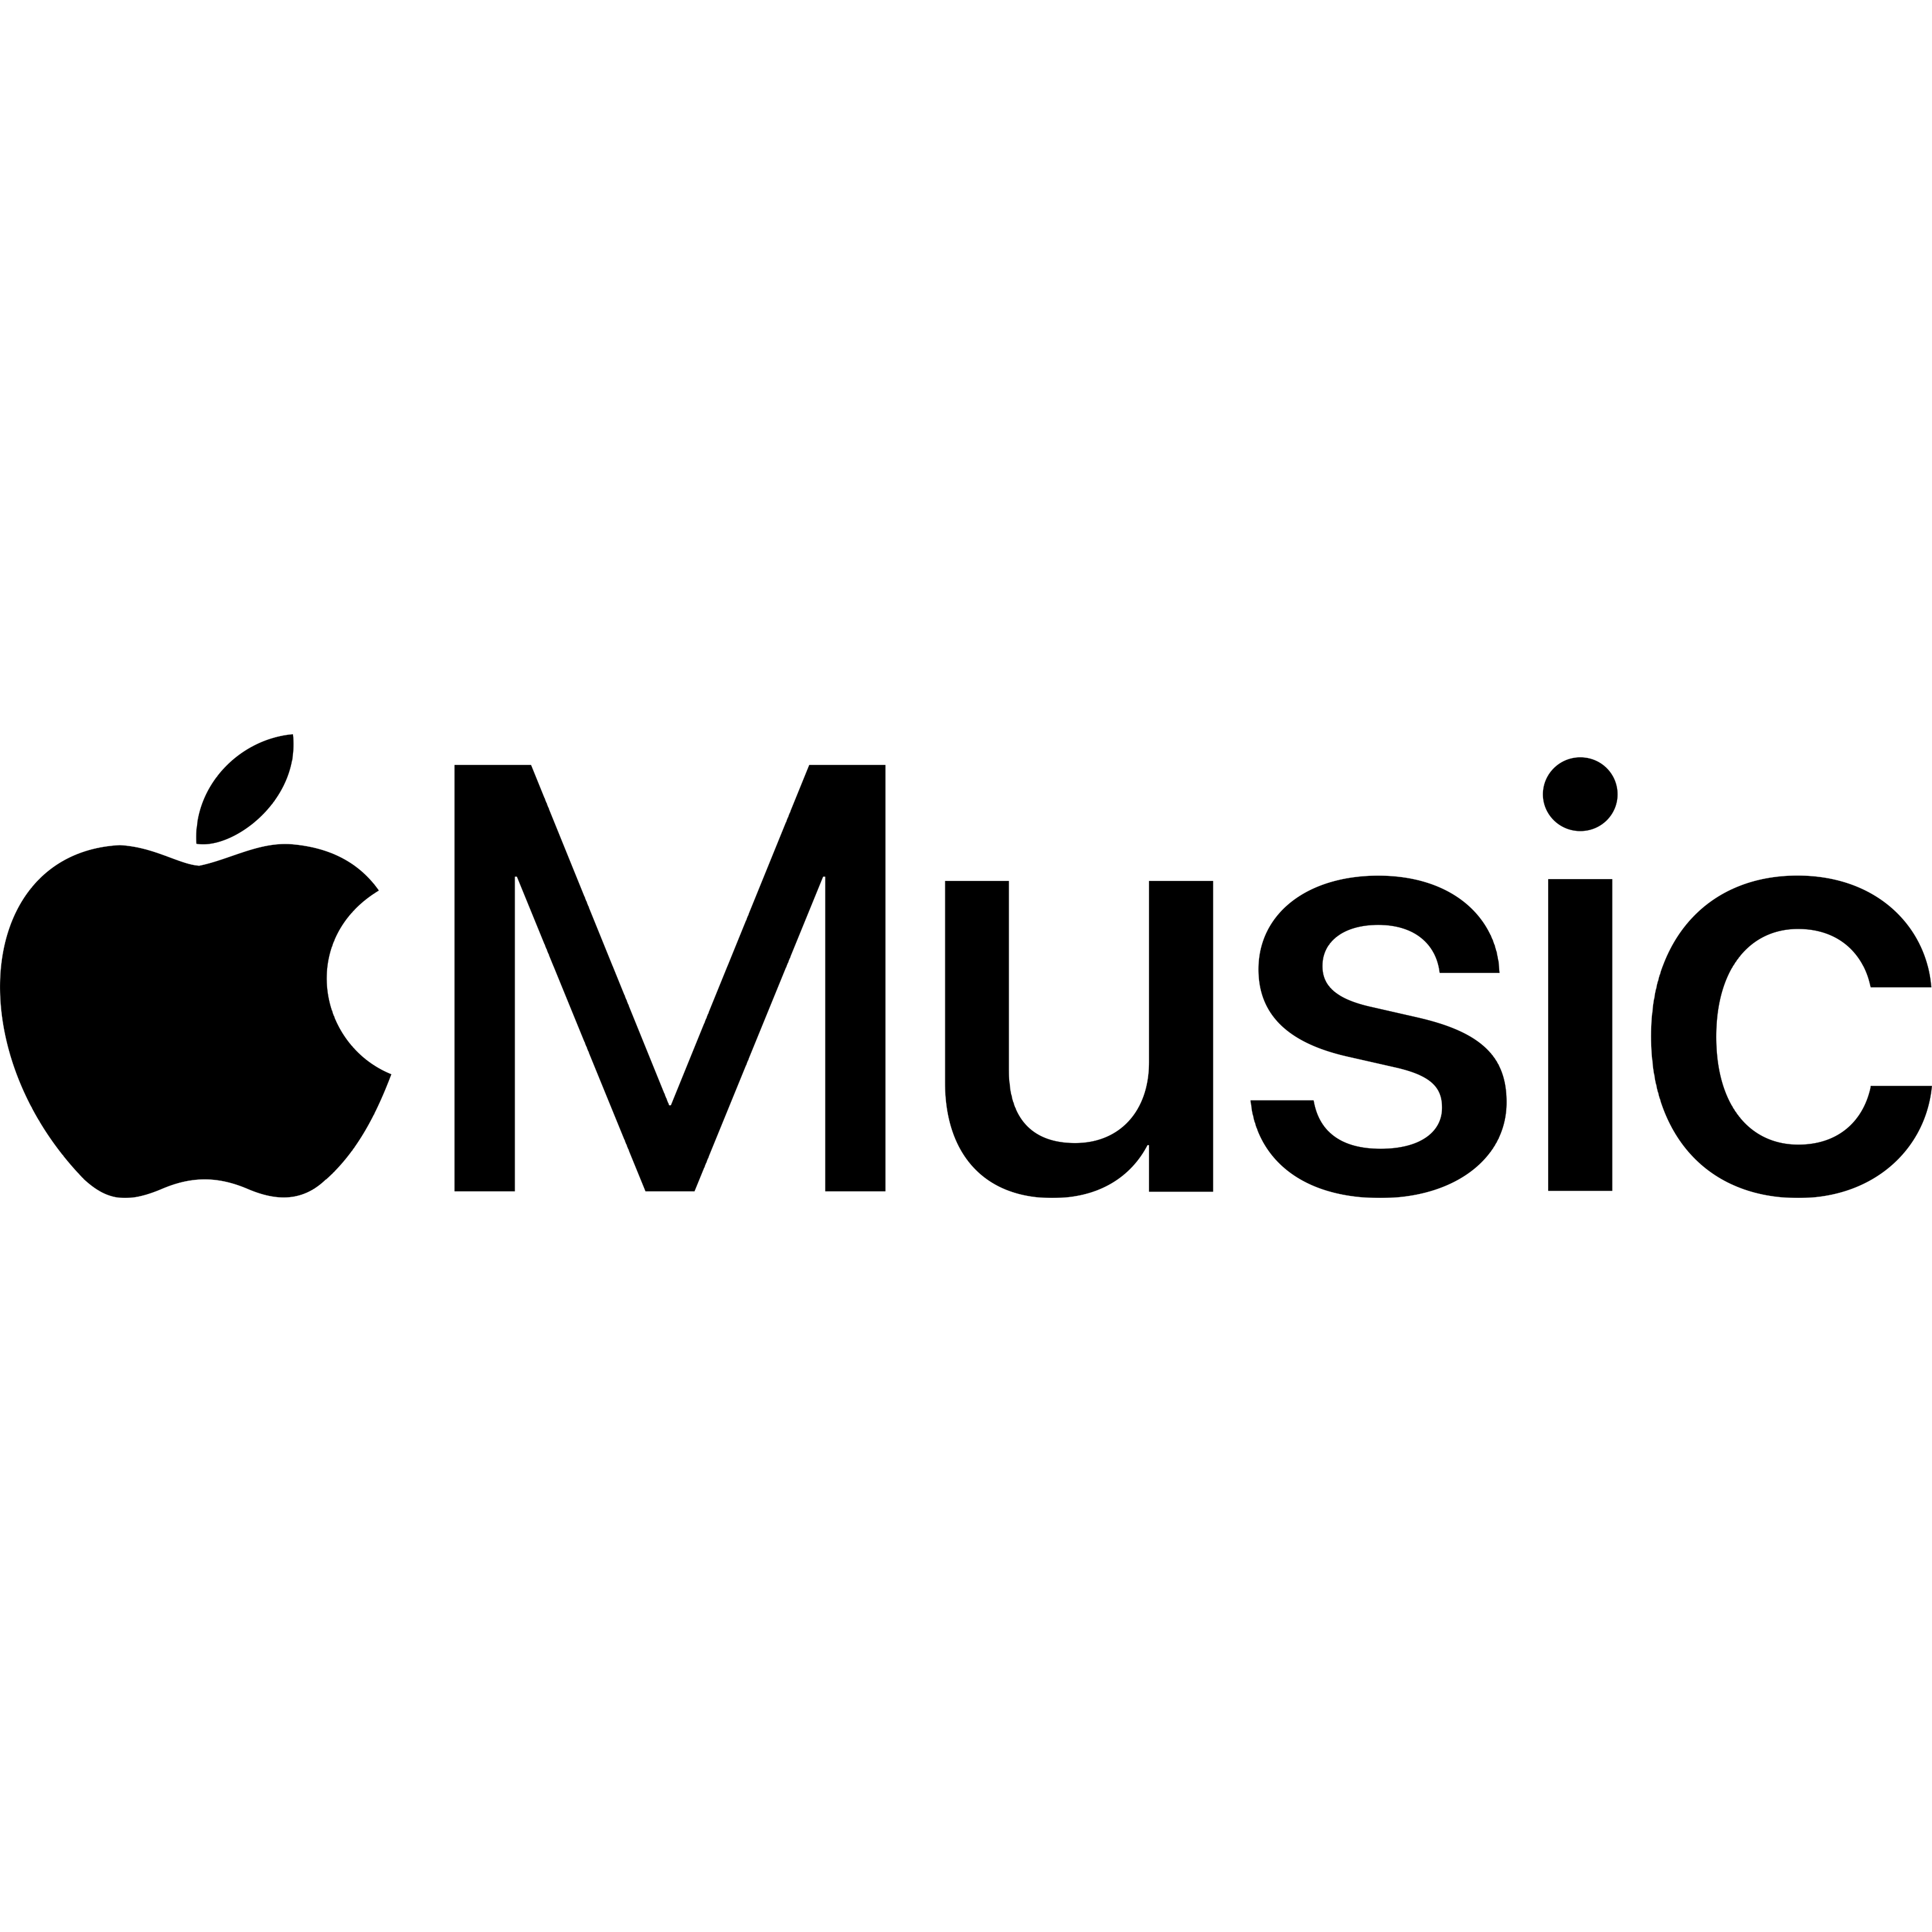 Applemusic 2019 Logo Transparent Image